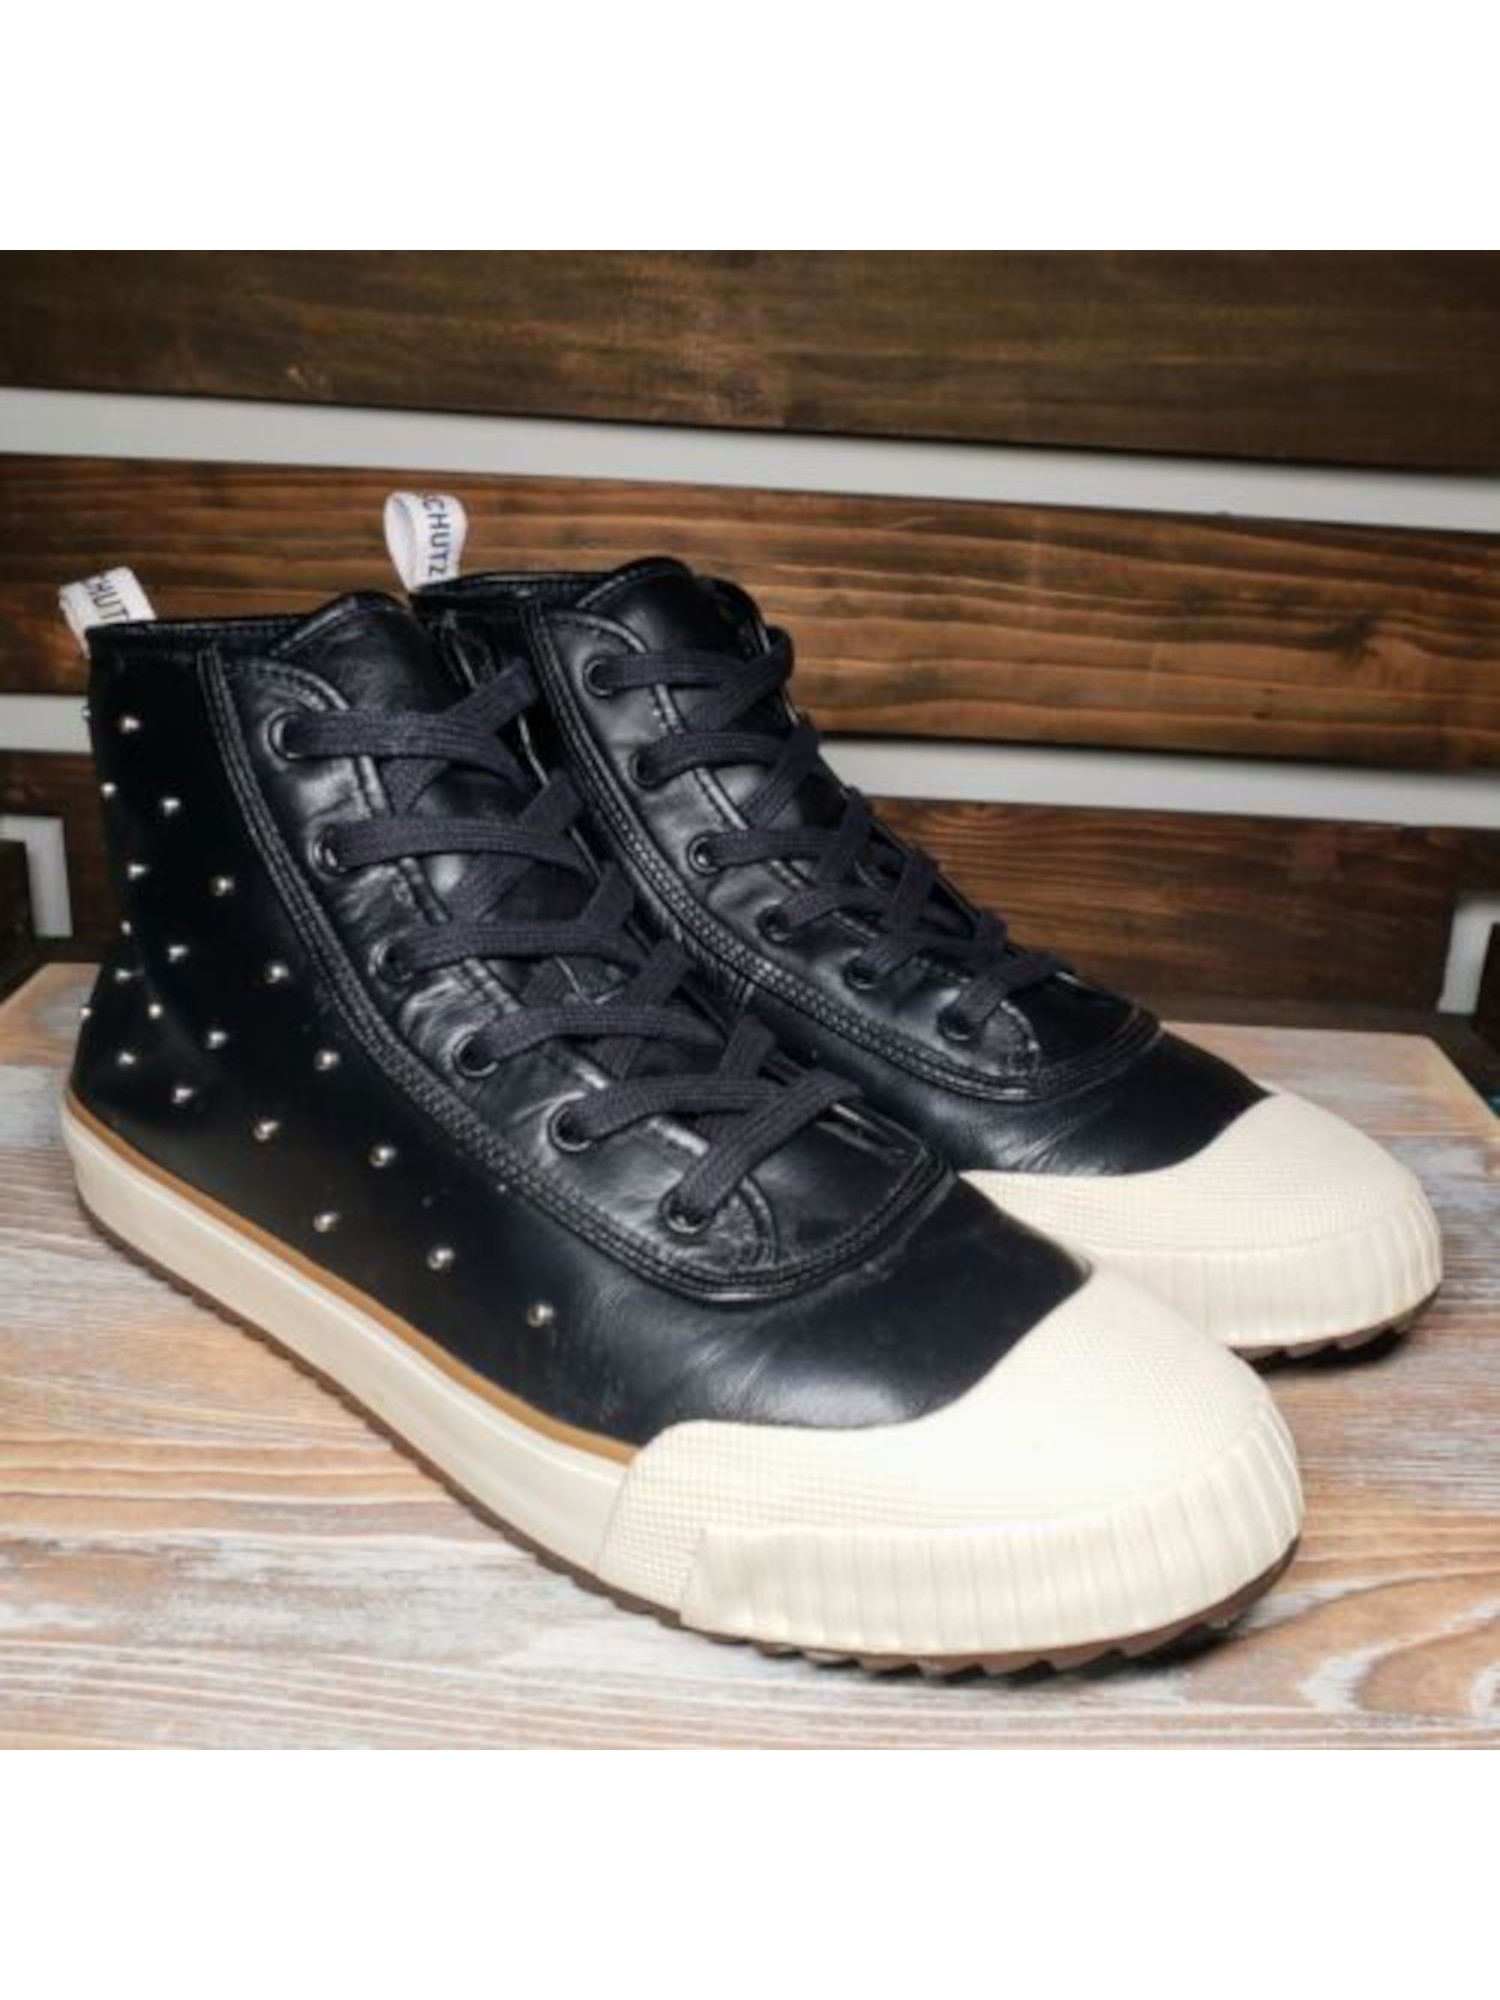 SCHUTZ Womens Black Studded Belindah Cap Toe Lace-Up Sneakers Shoes 10 B